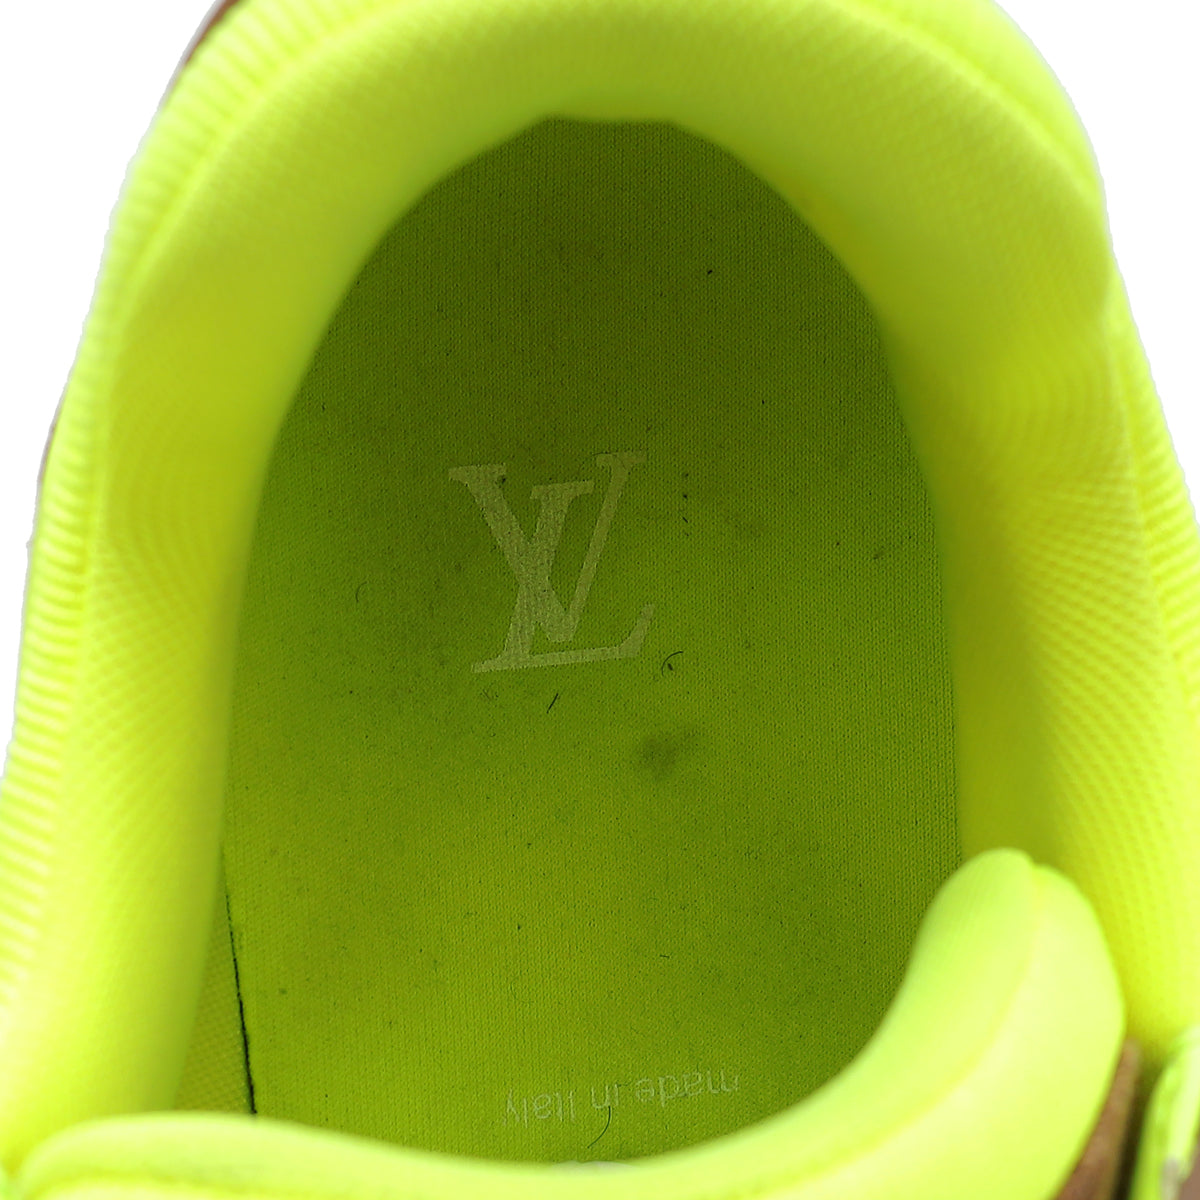 Louis Vuitton Monogram Embossed Trainer Sneaker 11